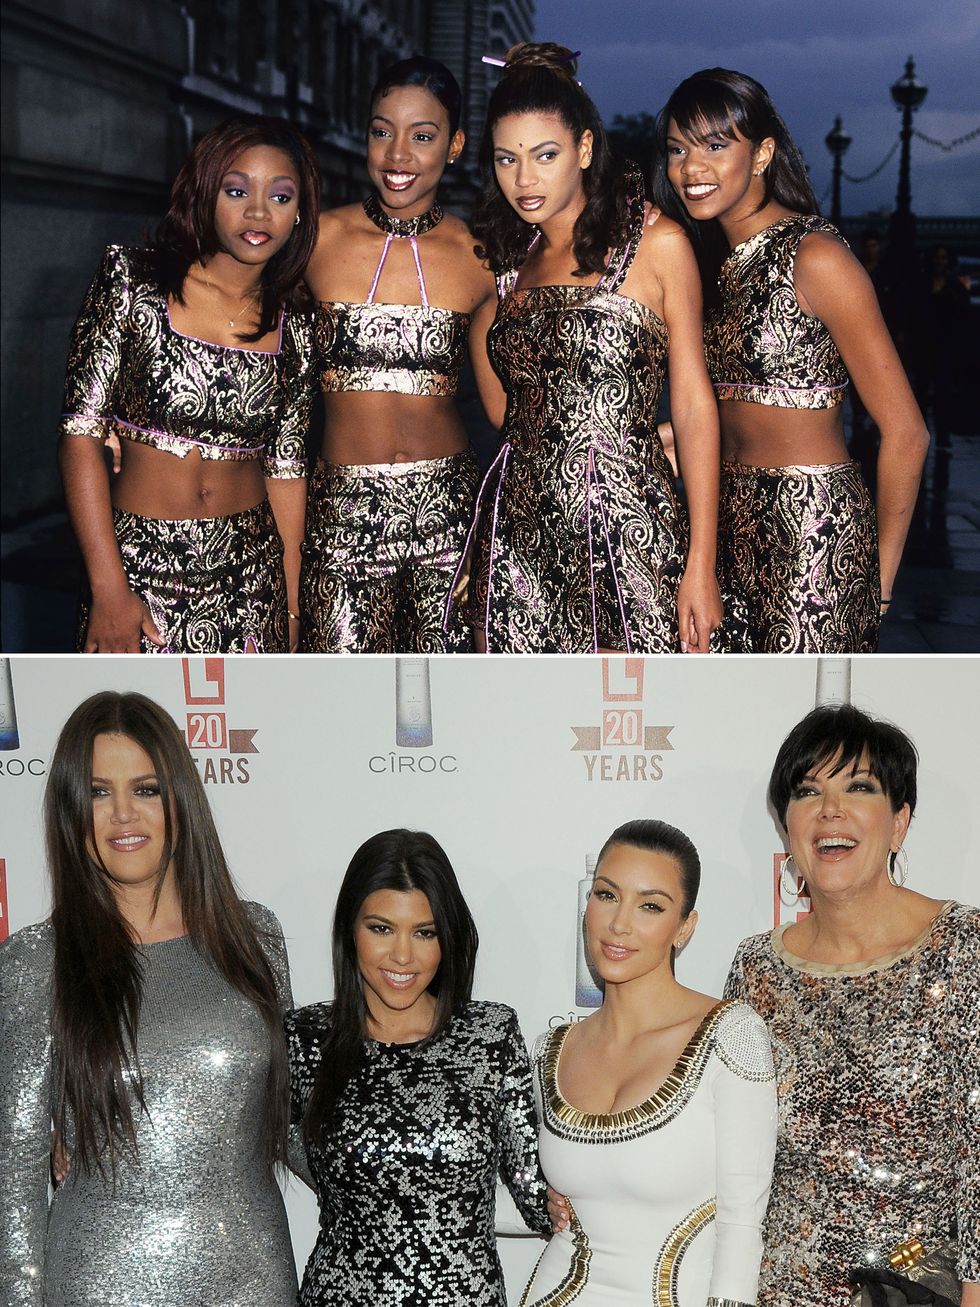 Kardashians dressed like Destiny's Child